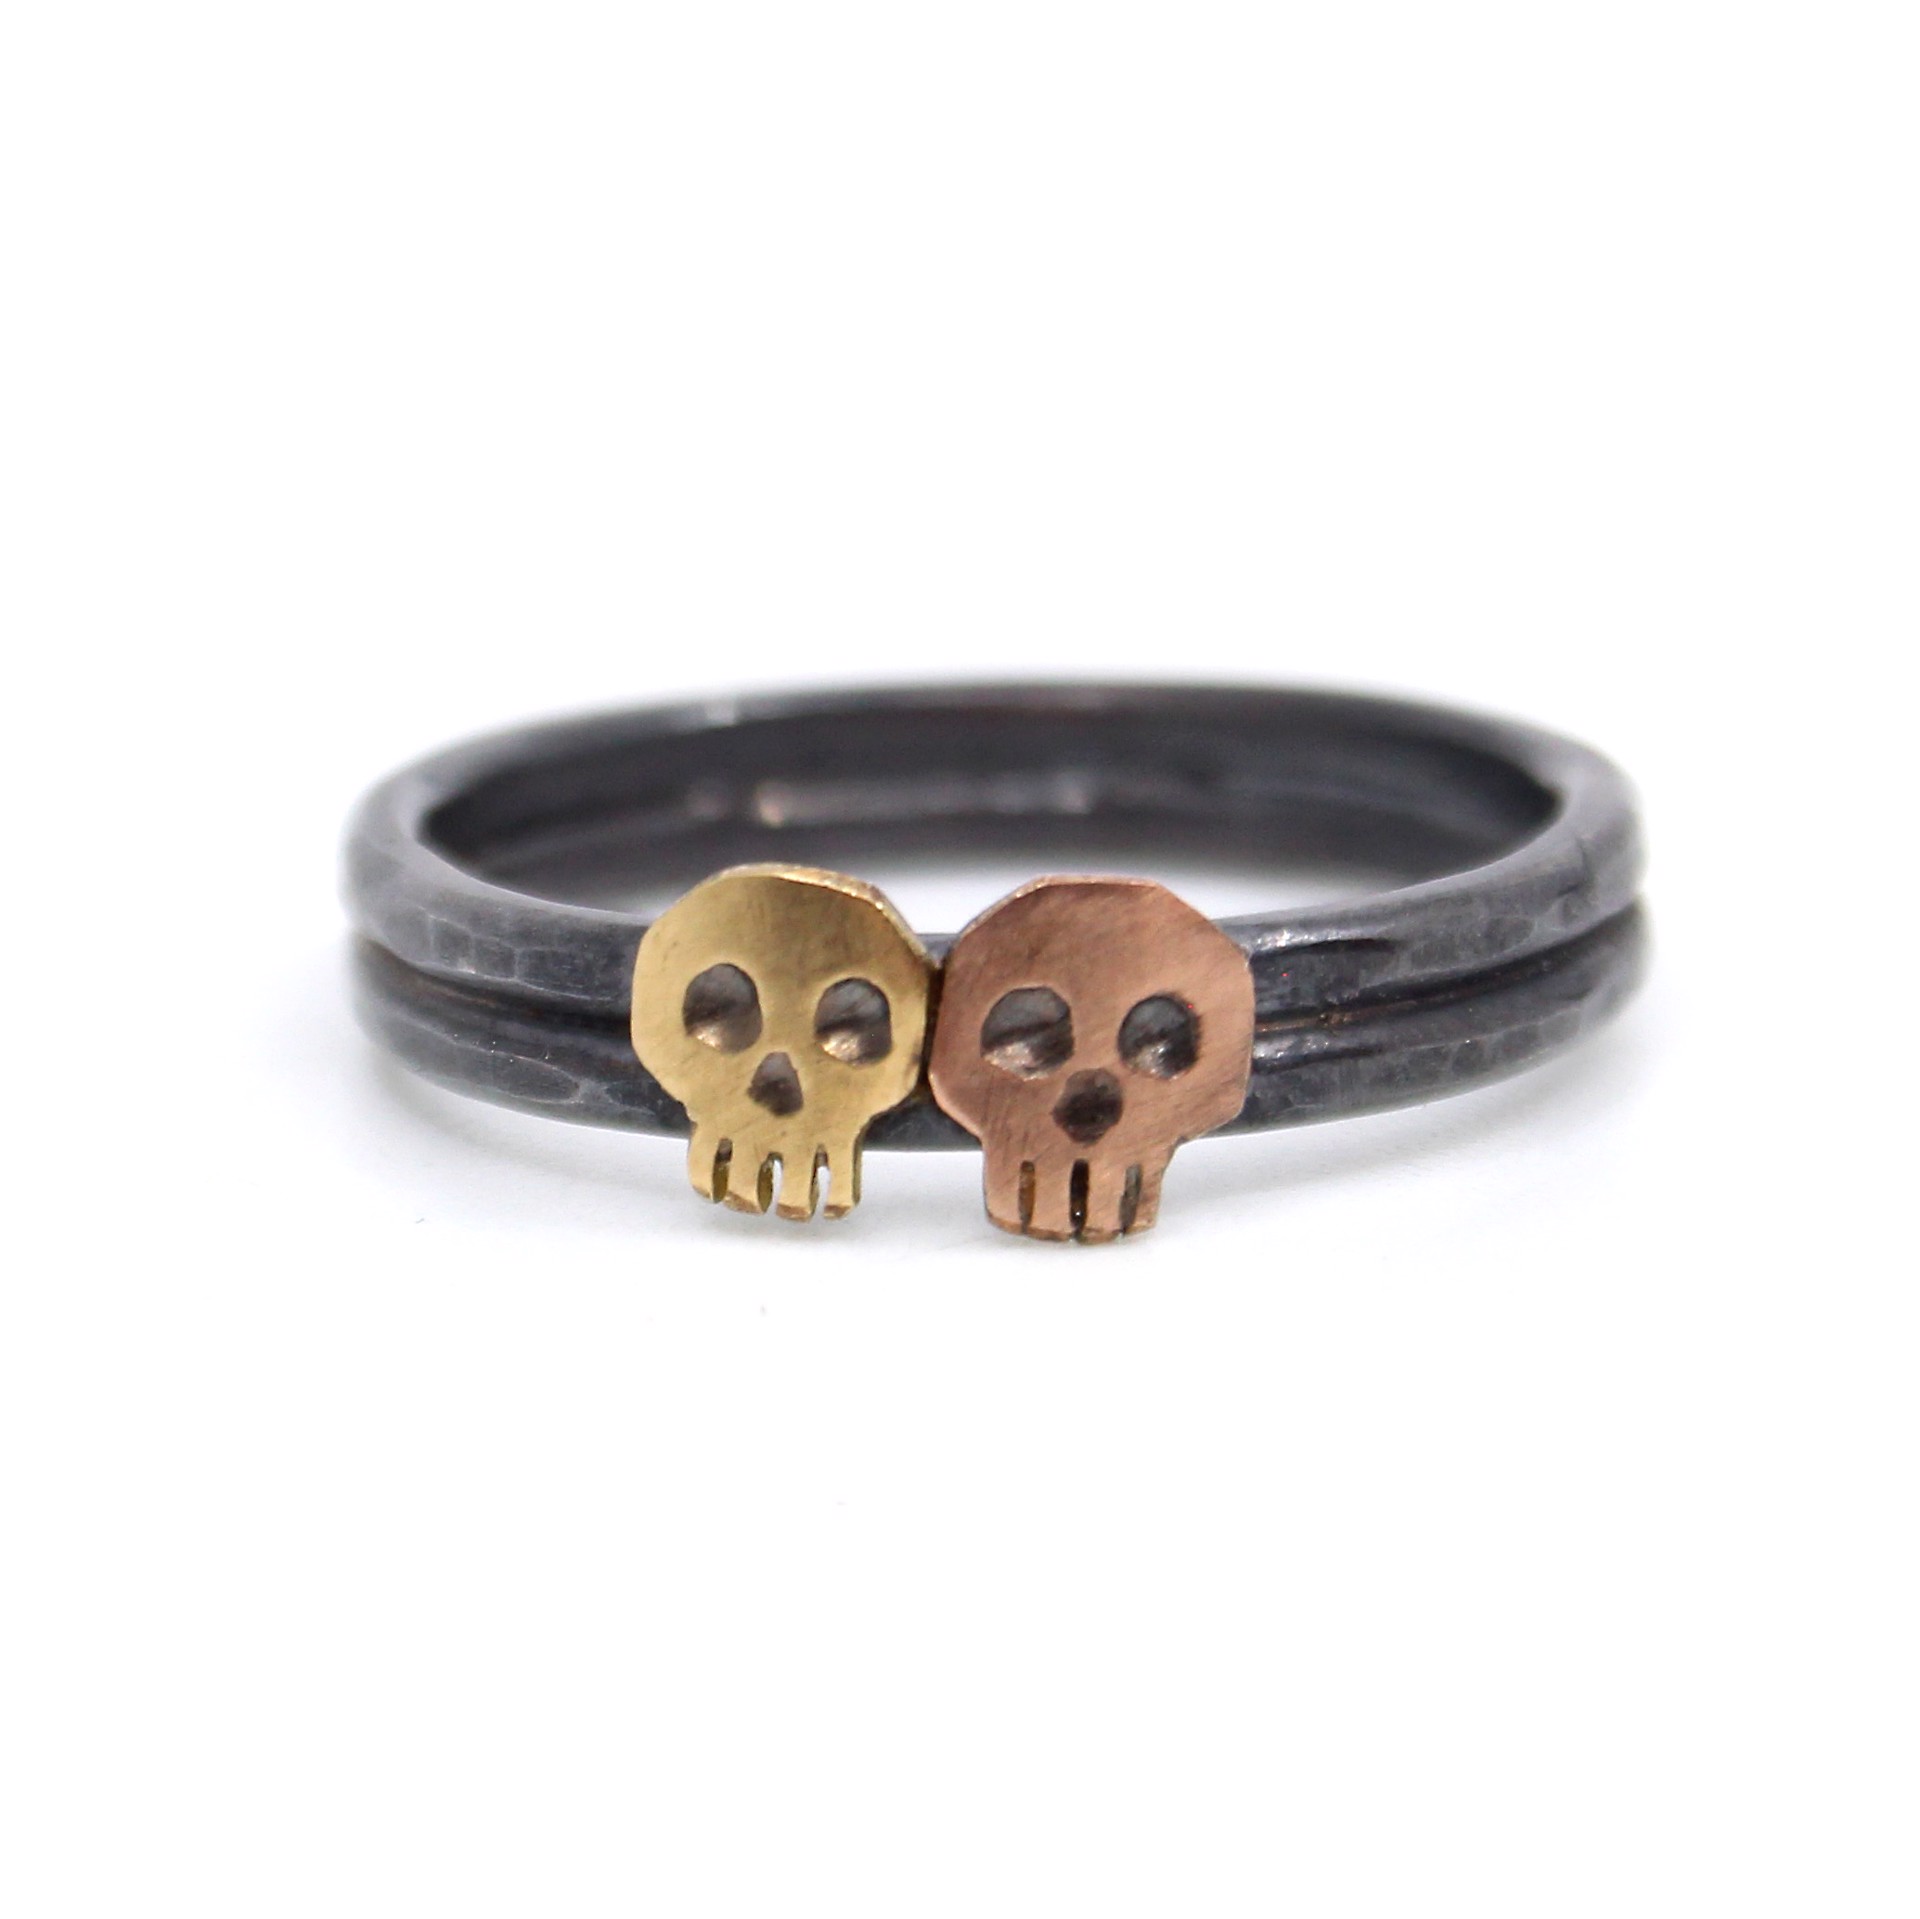 Skull Buddies Ring (Size 8) by Susan Elnora